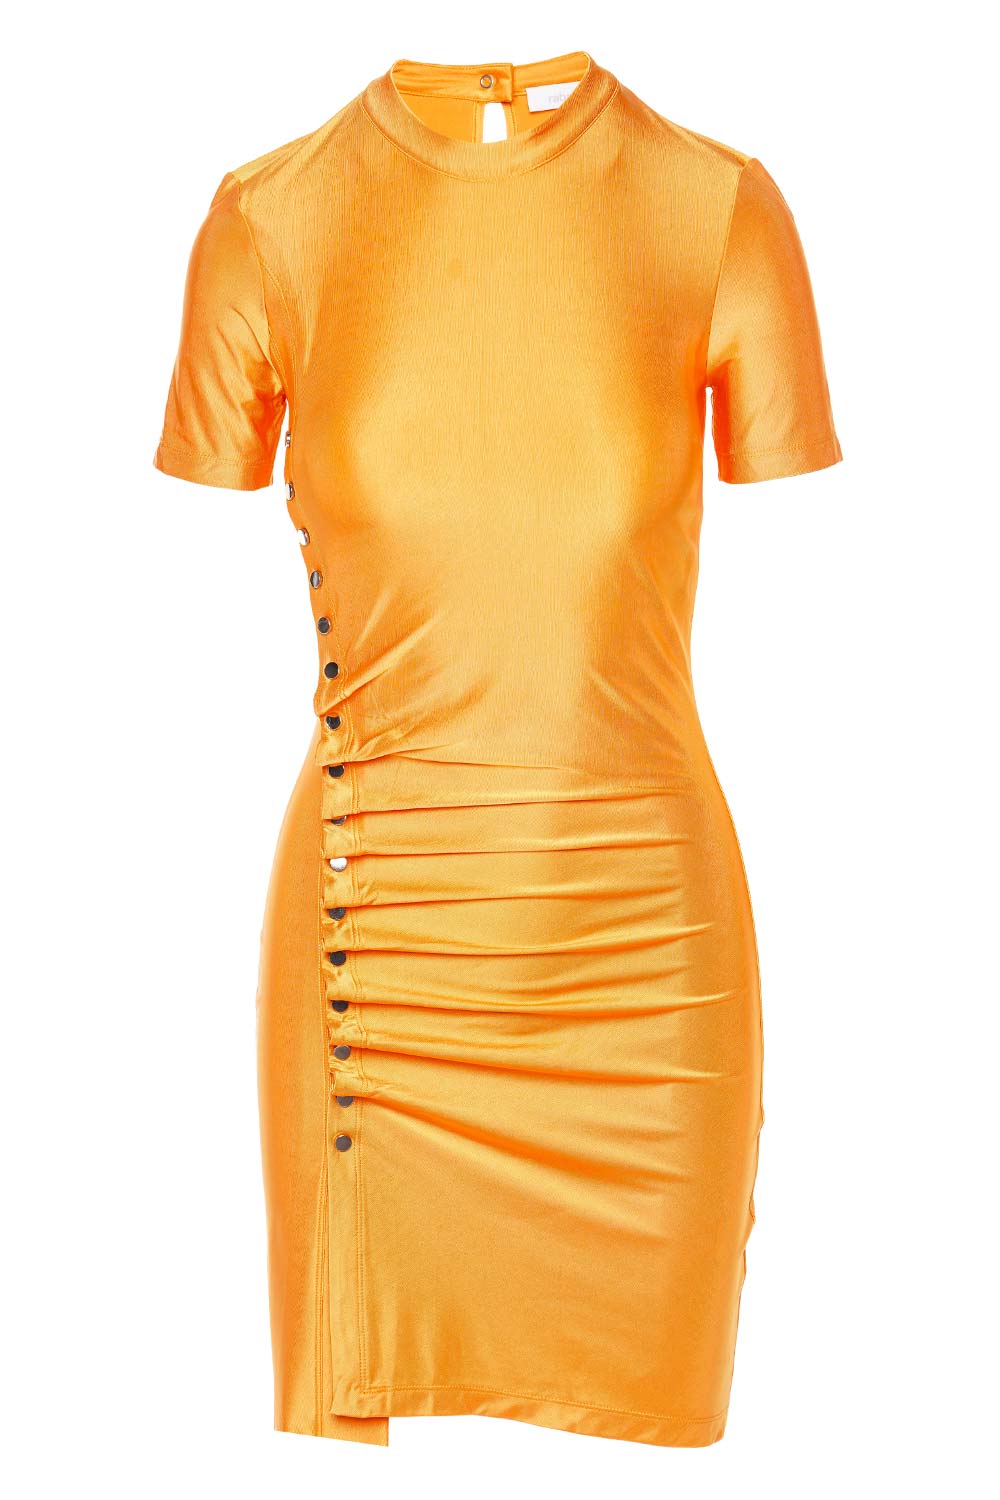 Paco Rabanne Orange Buttoned Jersey Mini Dress